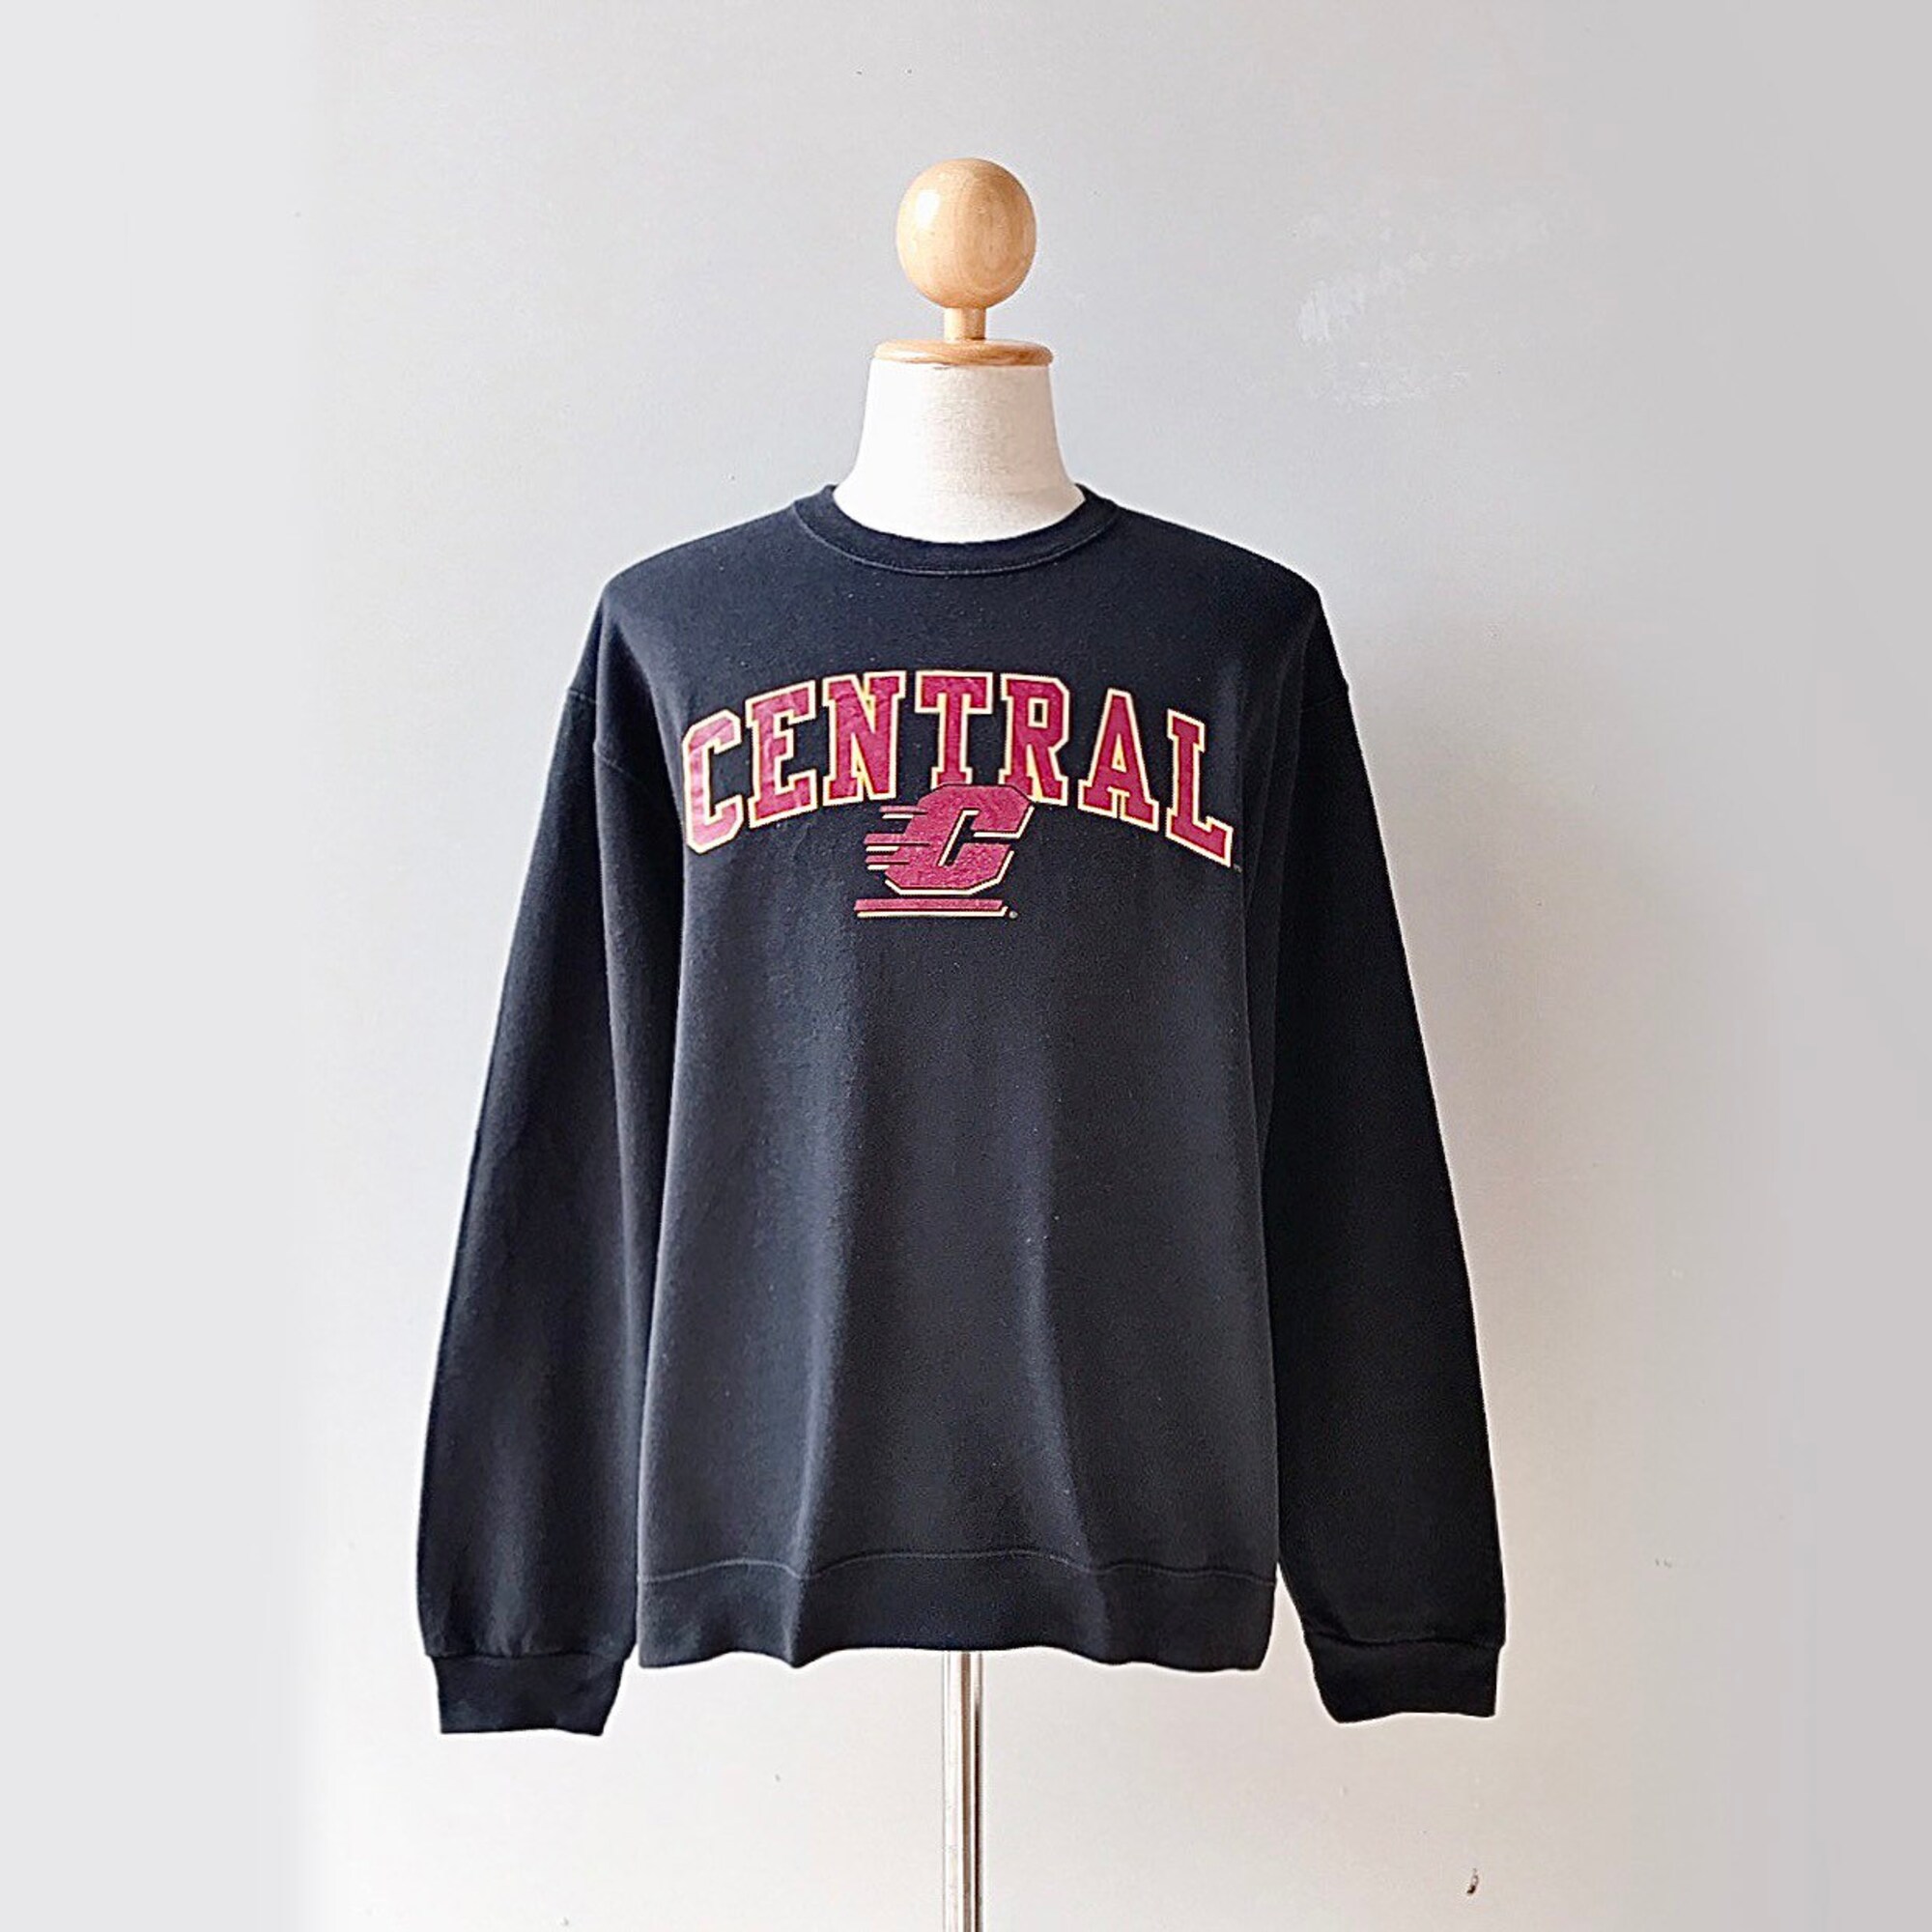 Discover Vintage Central Michigan University CMU Sweatshirt (size L)